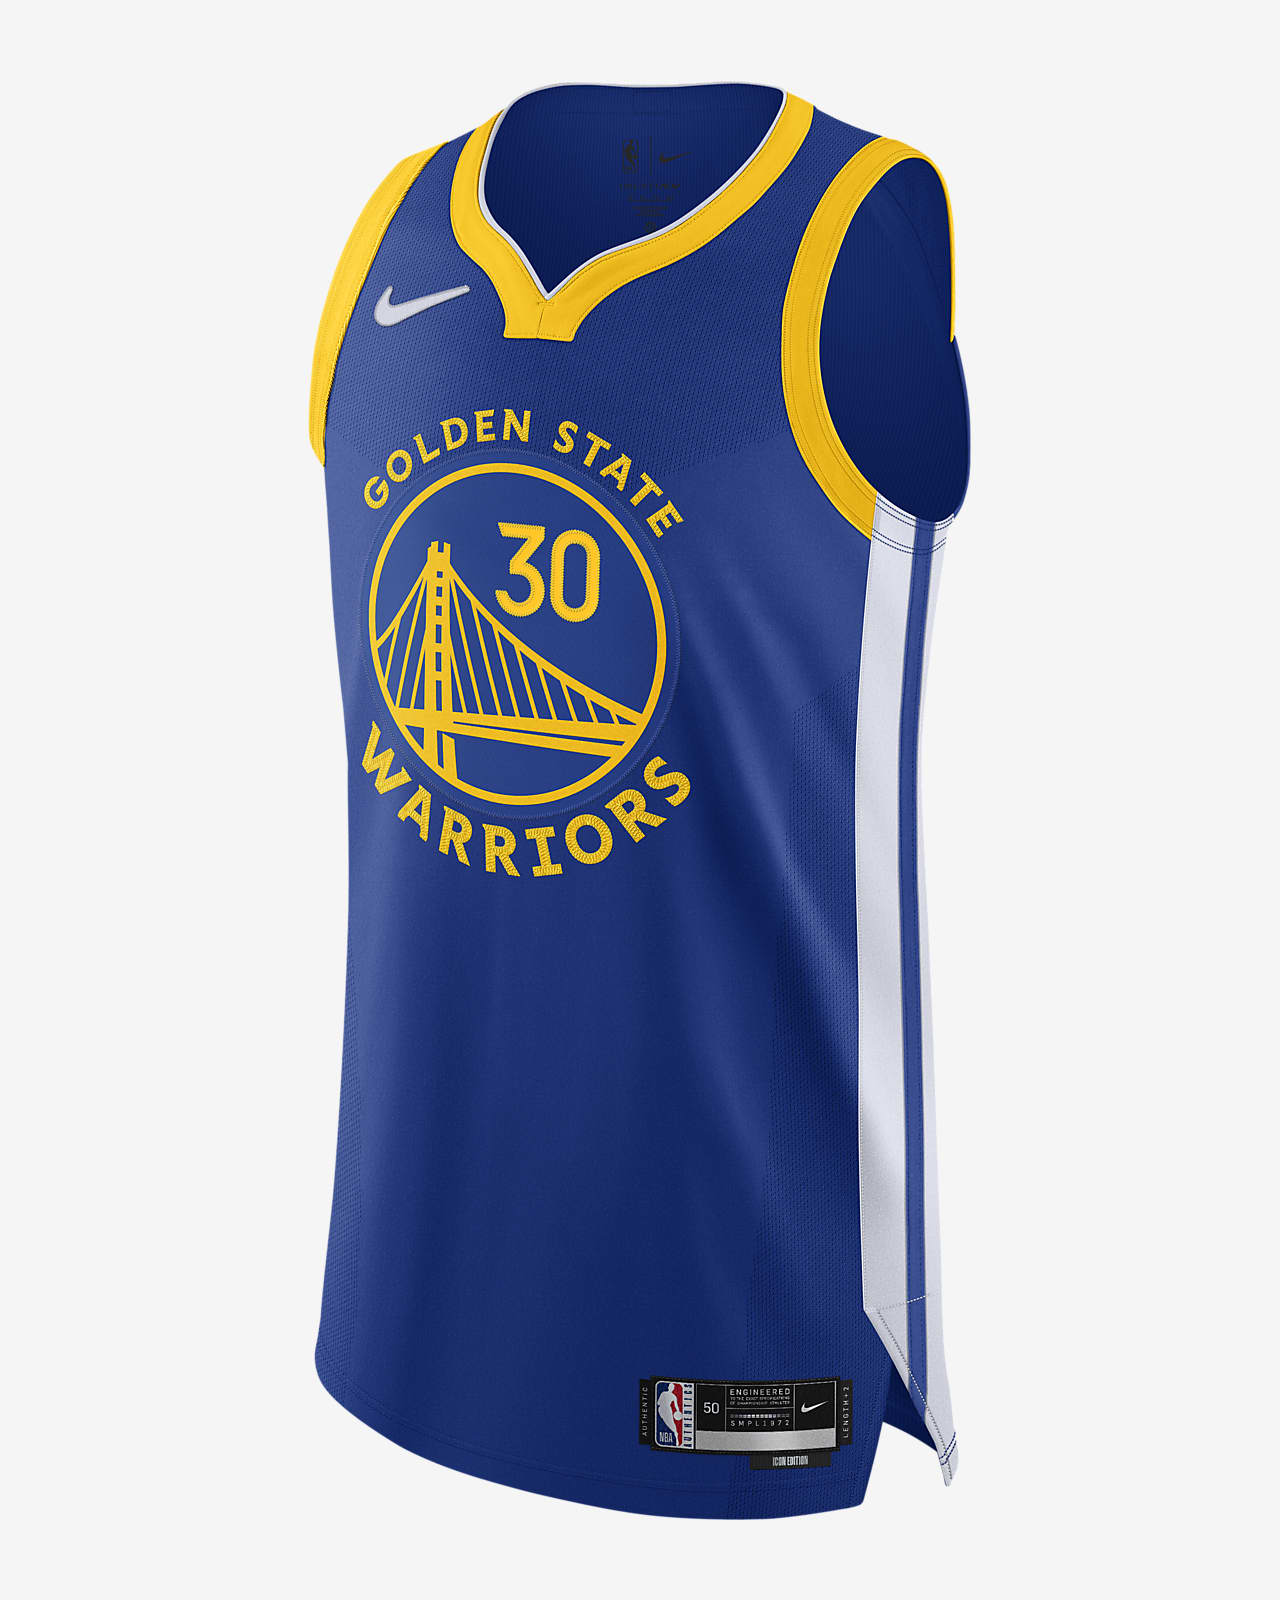 Jersey Nike de la NBA Authentic para hombre Stephen Curry Warriors Icon Edition 2020